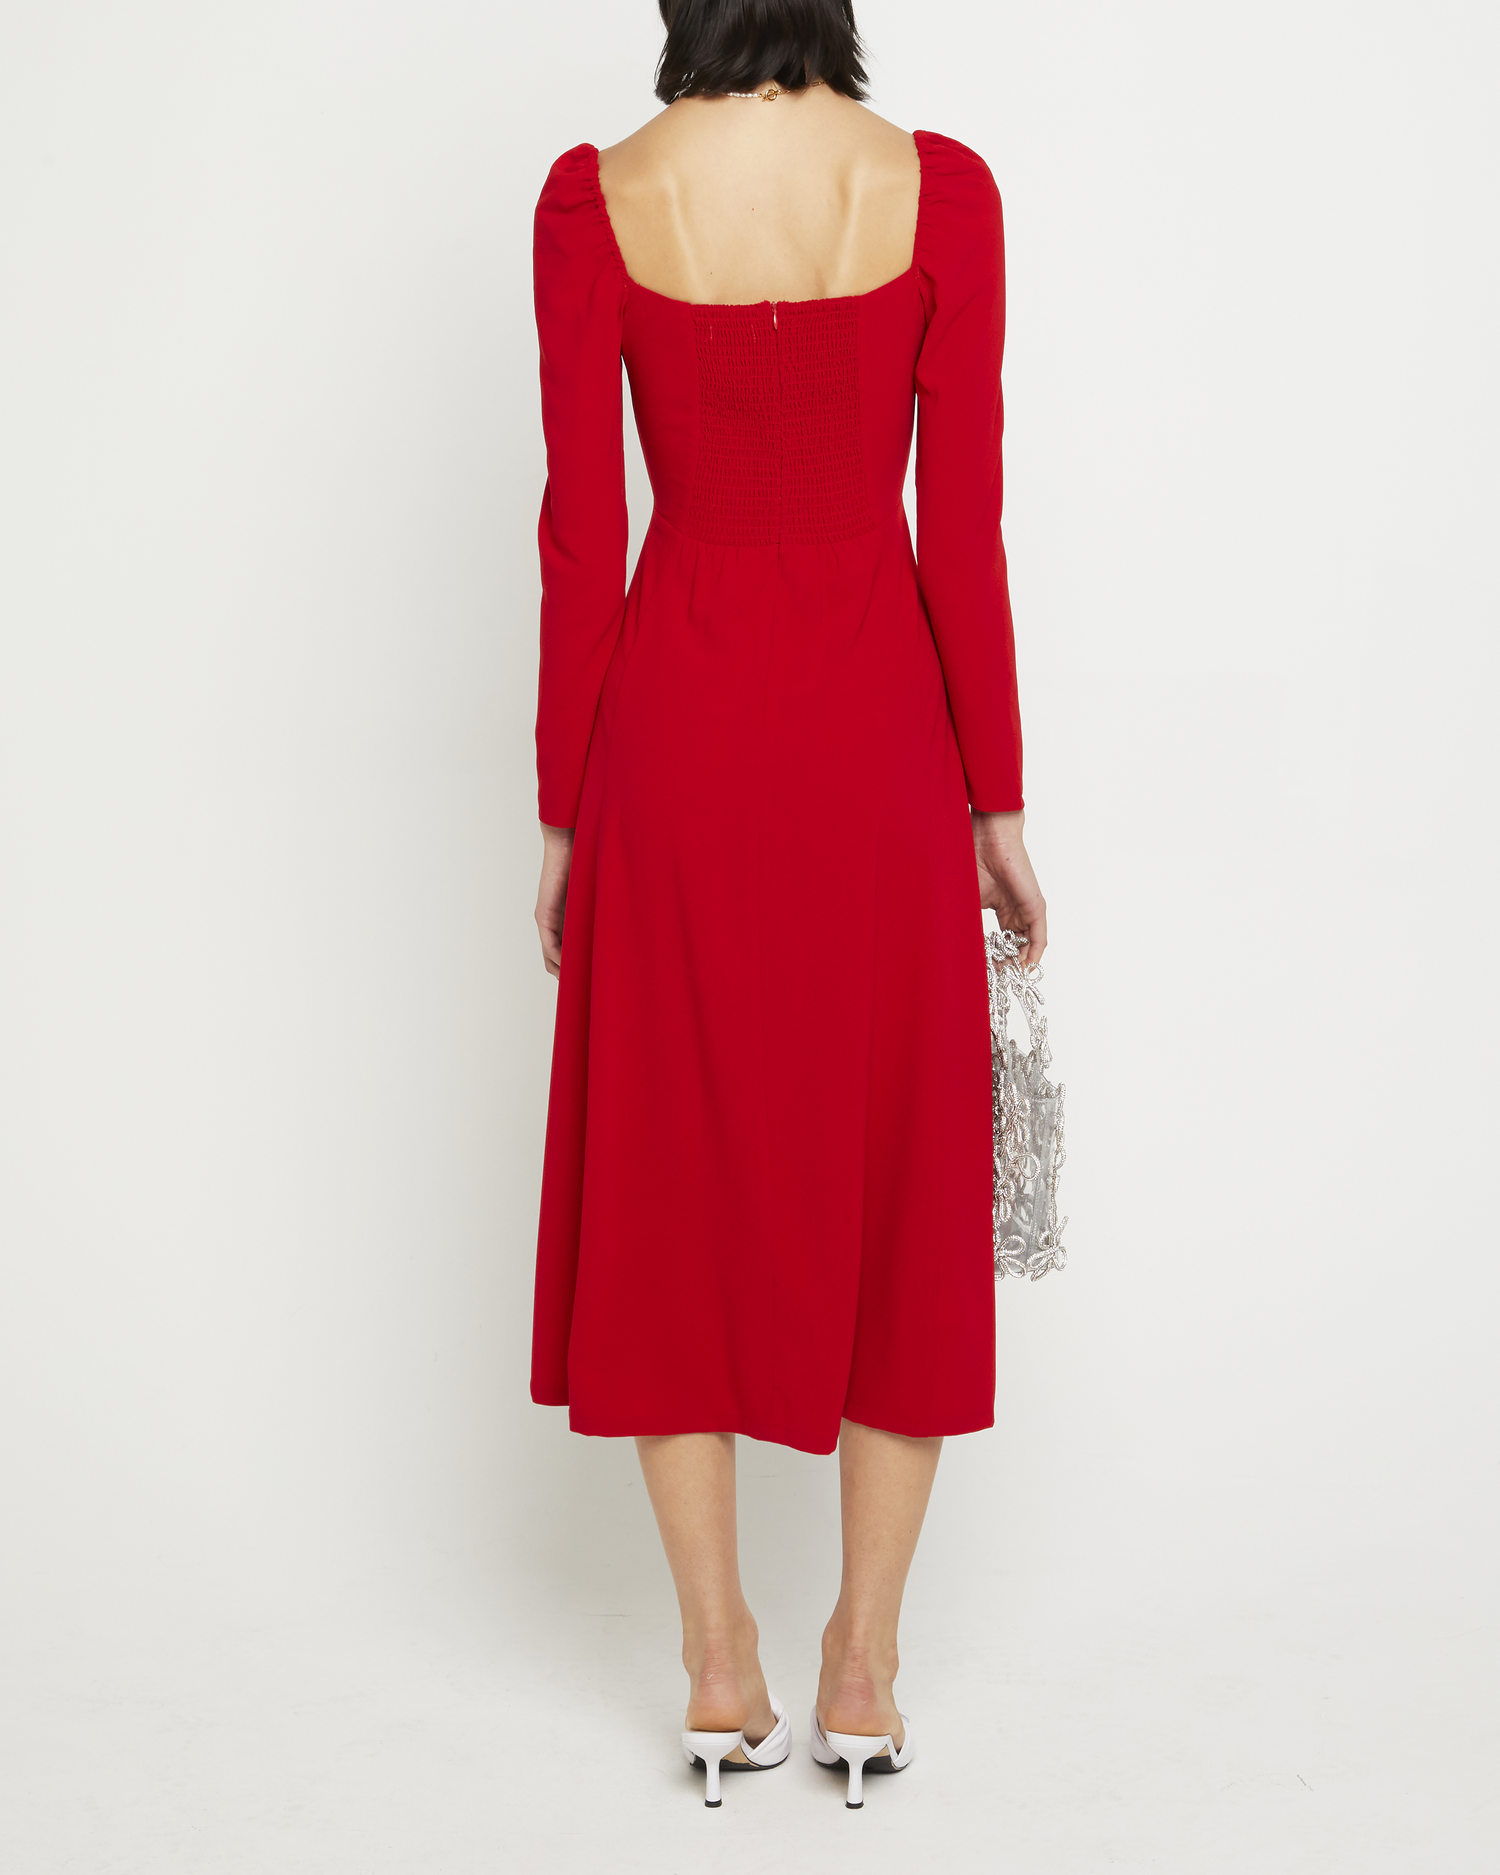 Second image of Lenon Dress, a red midi dress, side skirt slit, long sleeves, square neckline